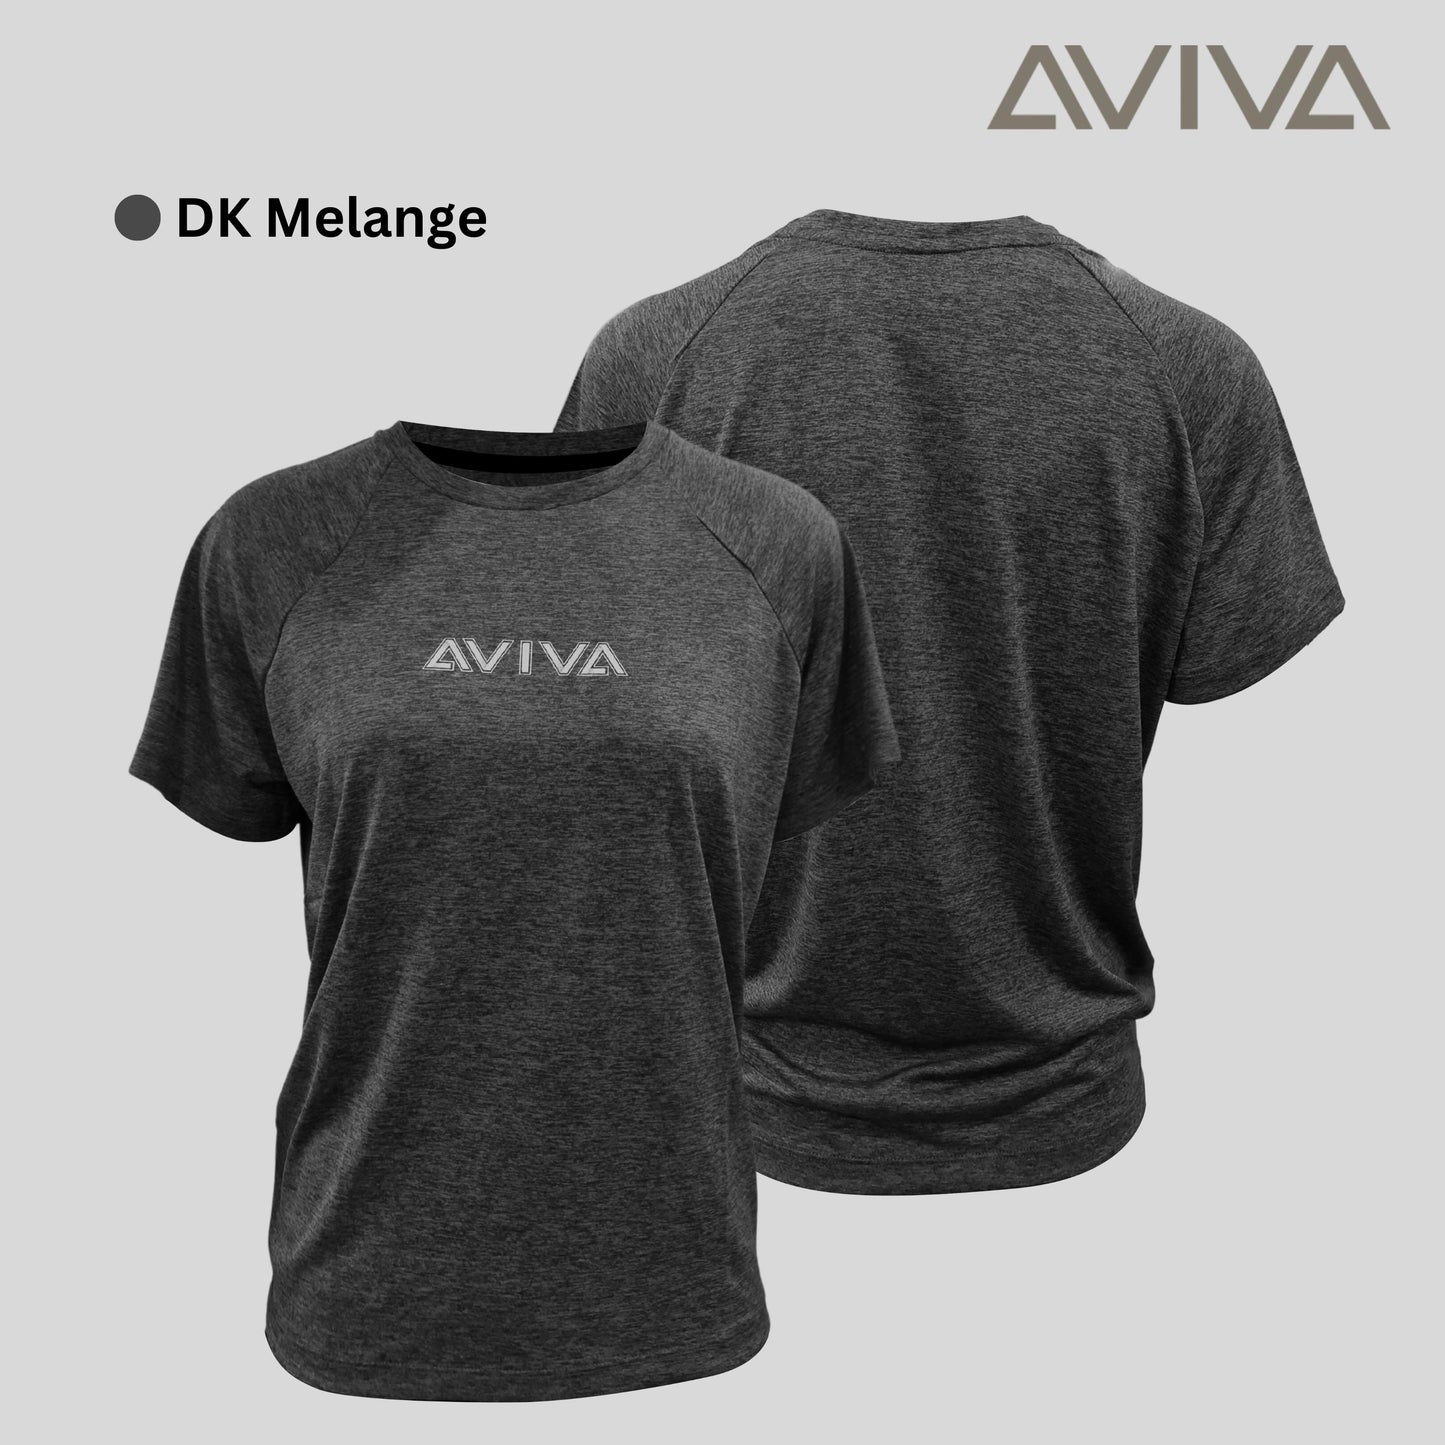 AVIVA Comfortable & Soft Women's Short Sleeve Top (80-8105)